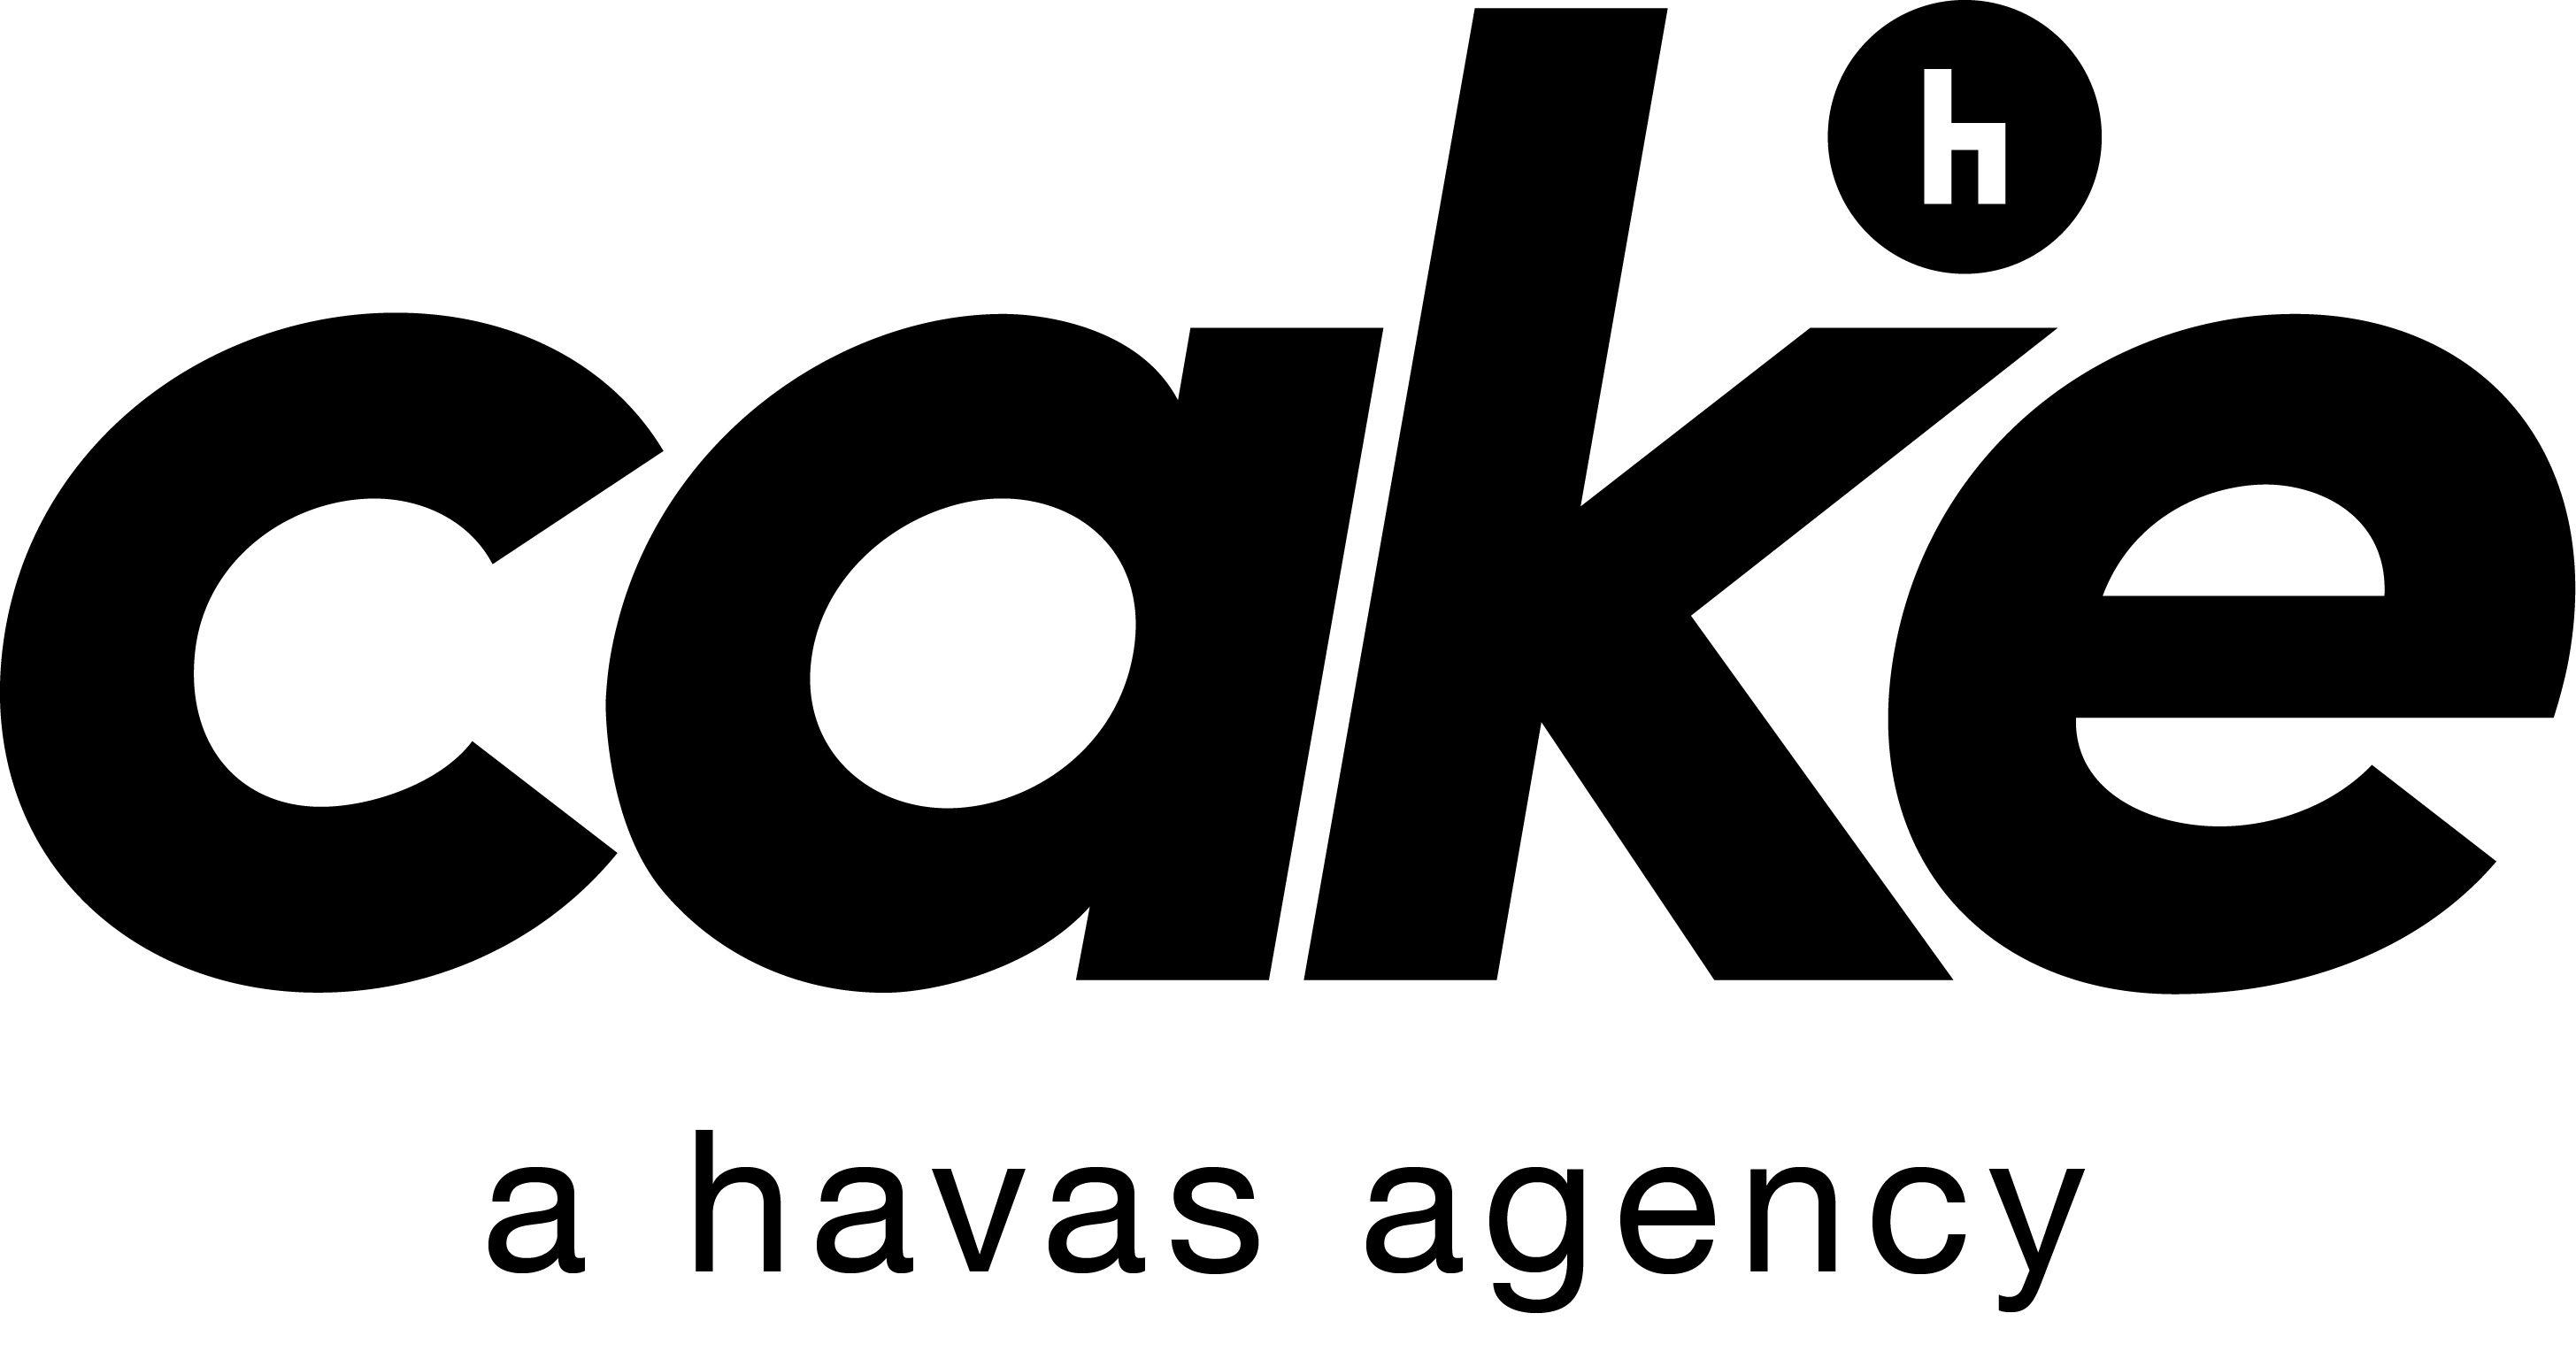 Havas Logo - Cake | Sport, Culture & Entertainment Agency | Havas KX | Havas KX - HKX